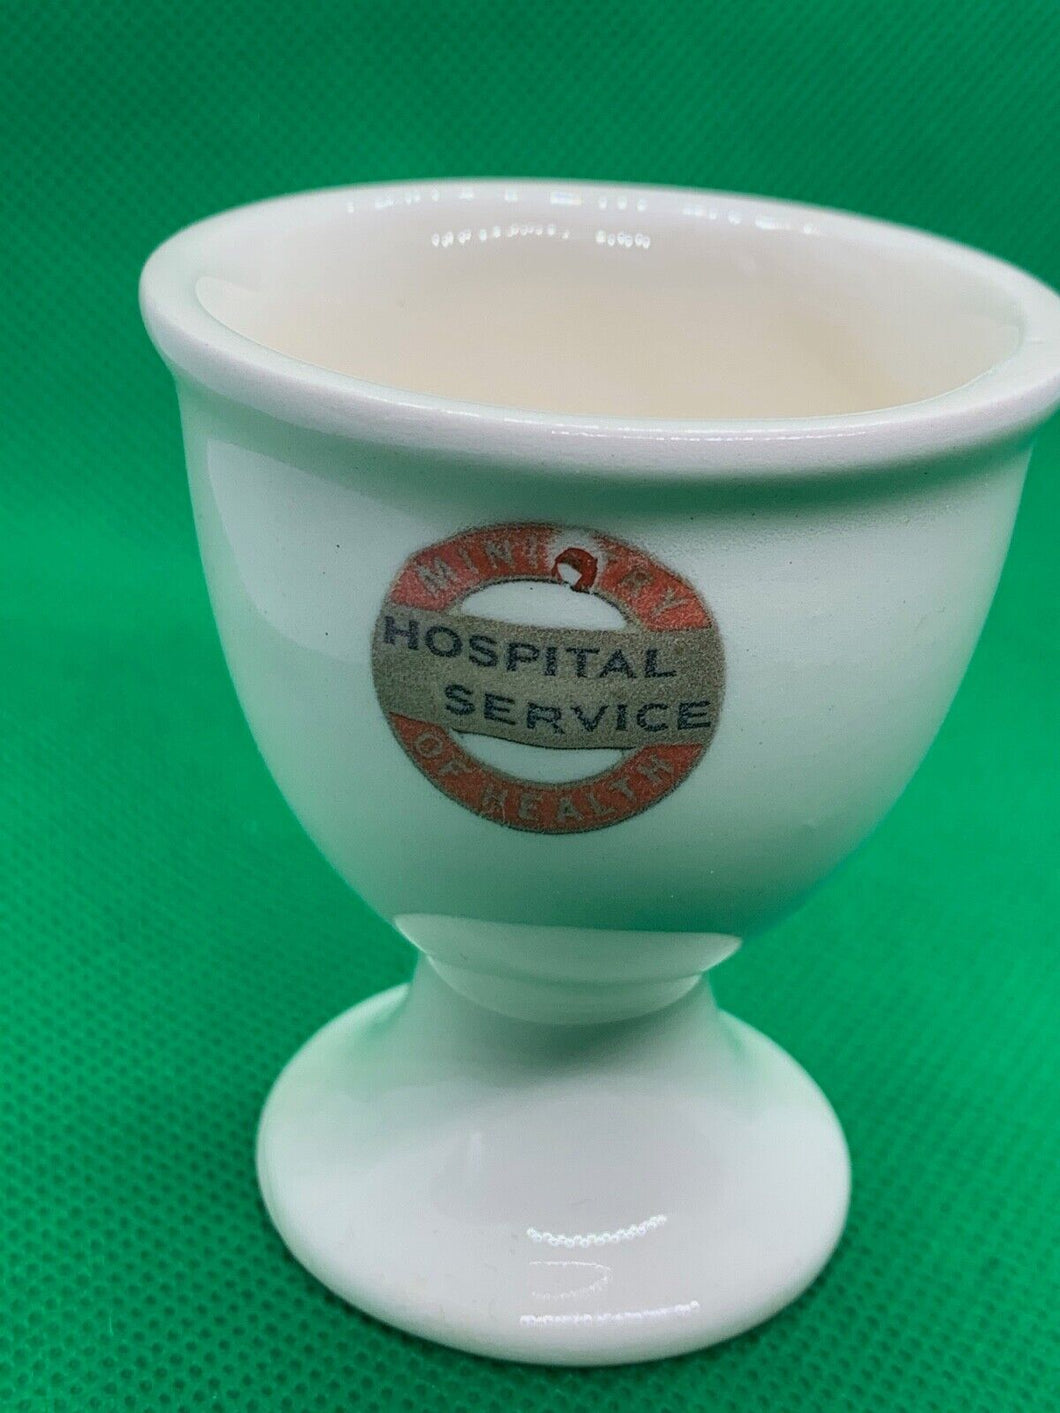 Hospital Service - No 145 - Badges of Empire Collectors Series Egg Cup